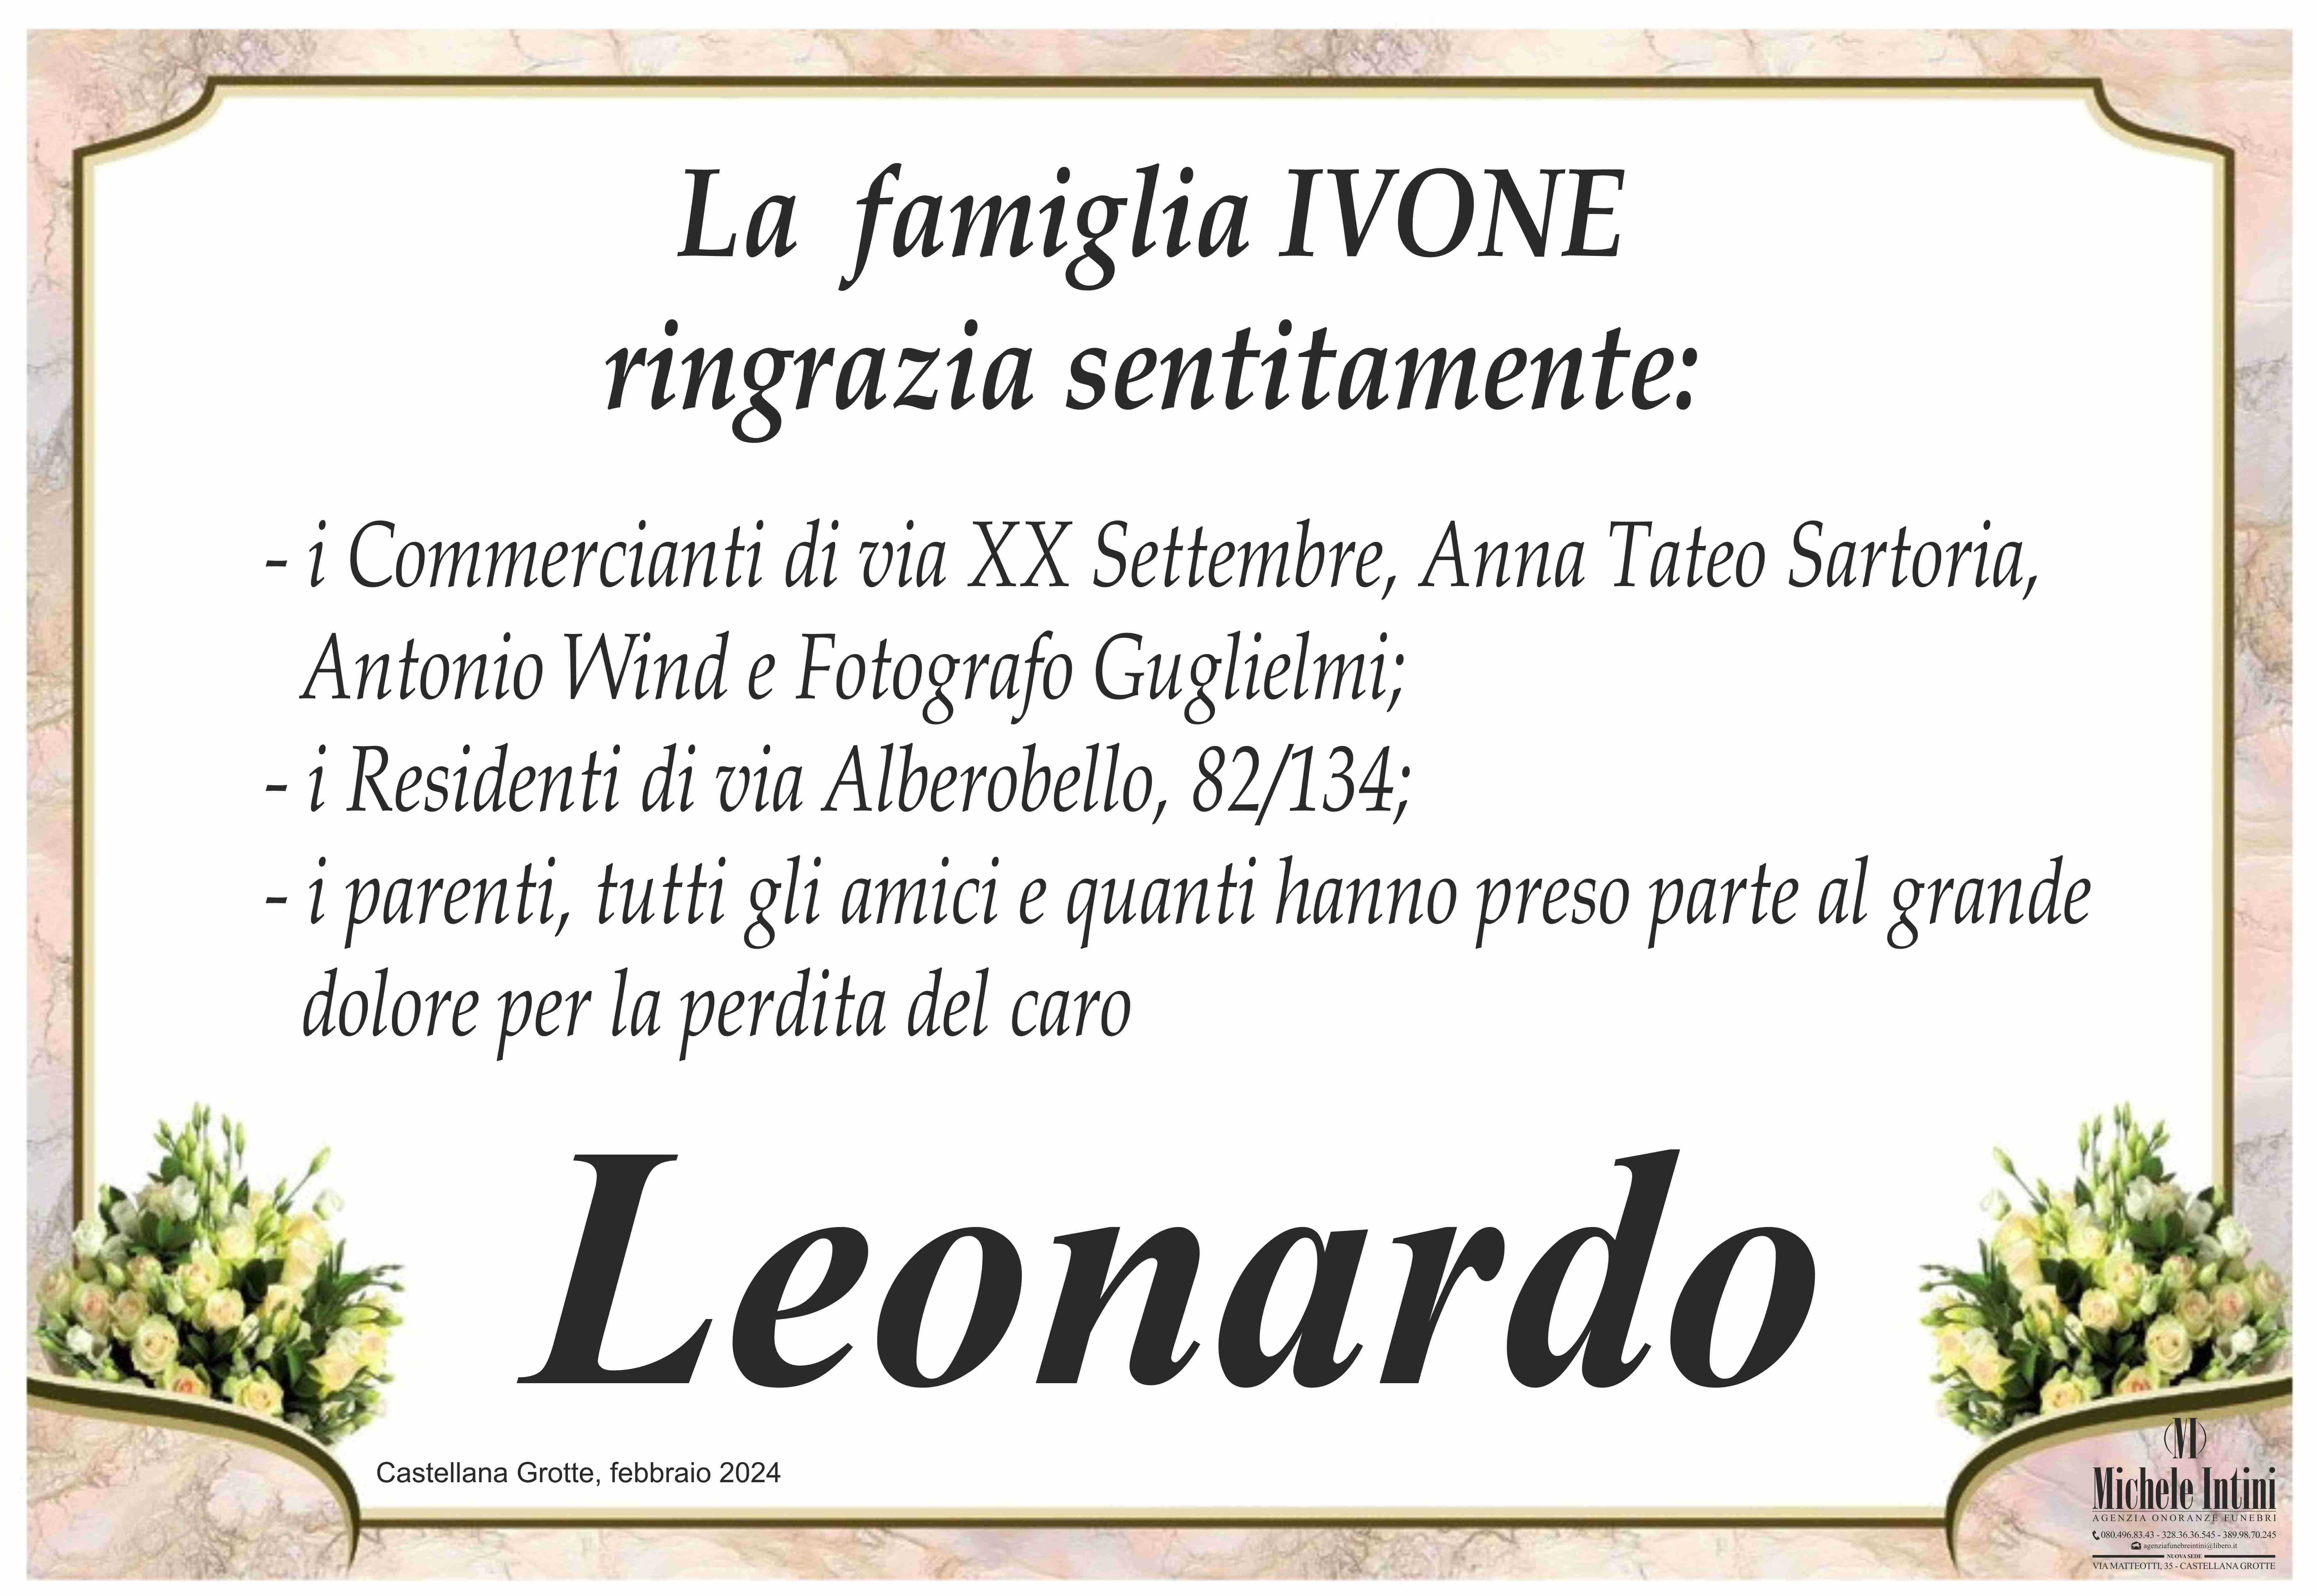 Leonardo Ivone